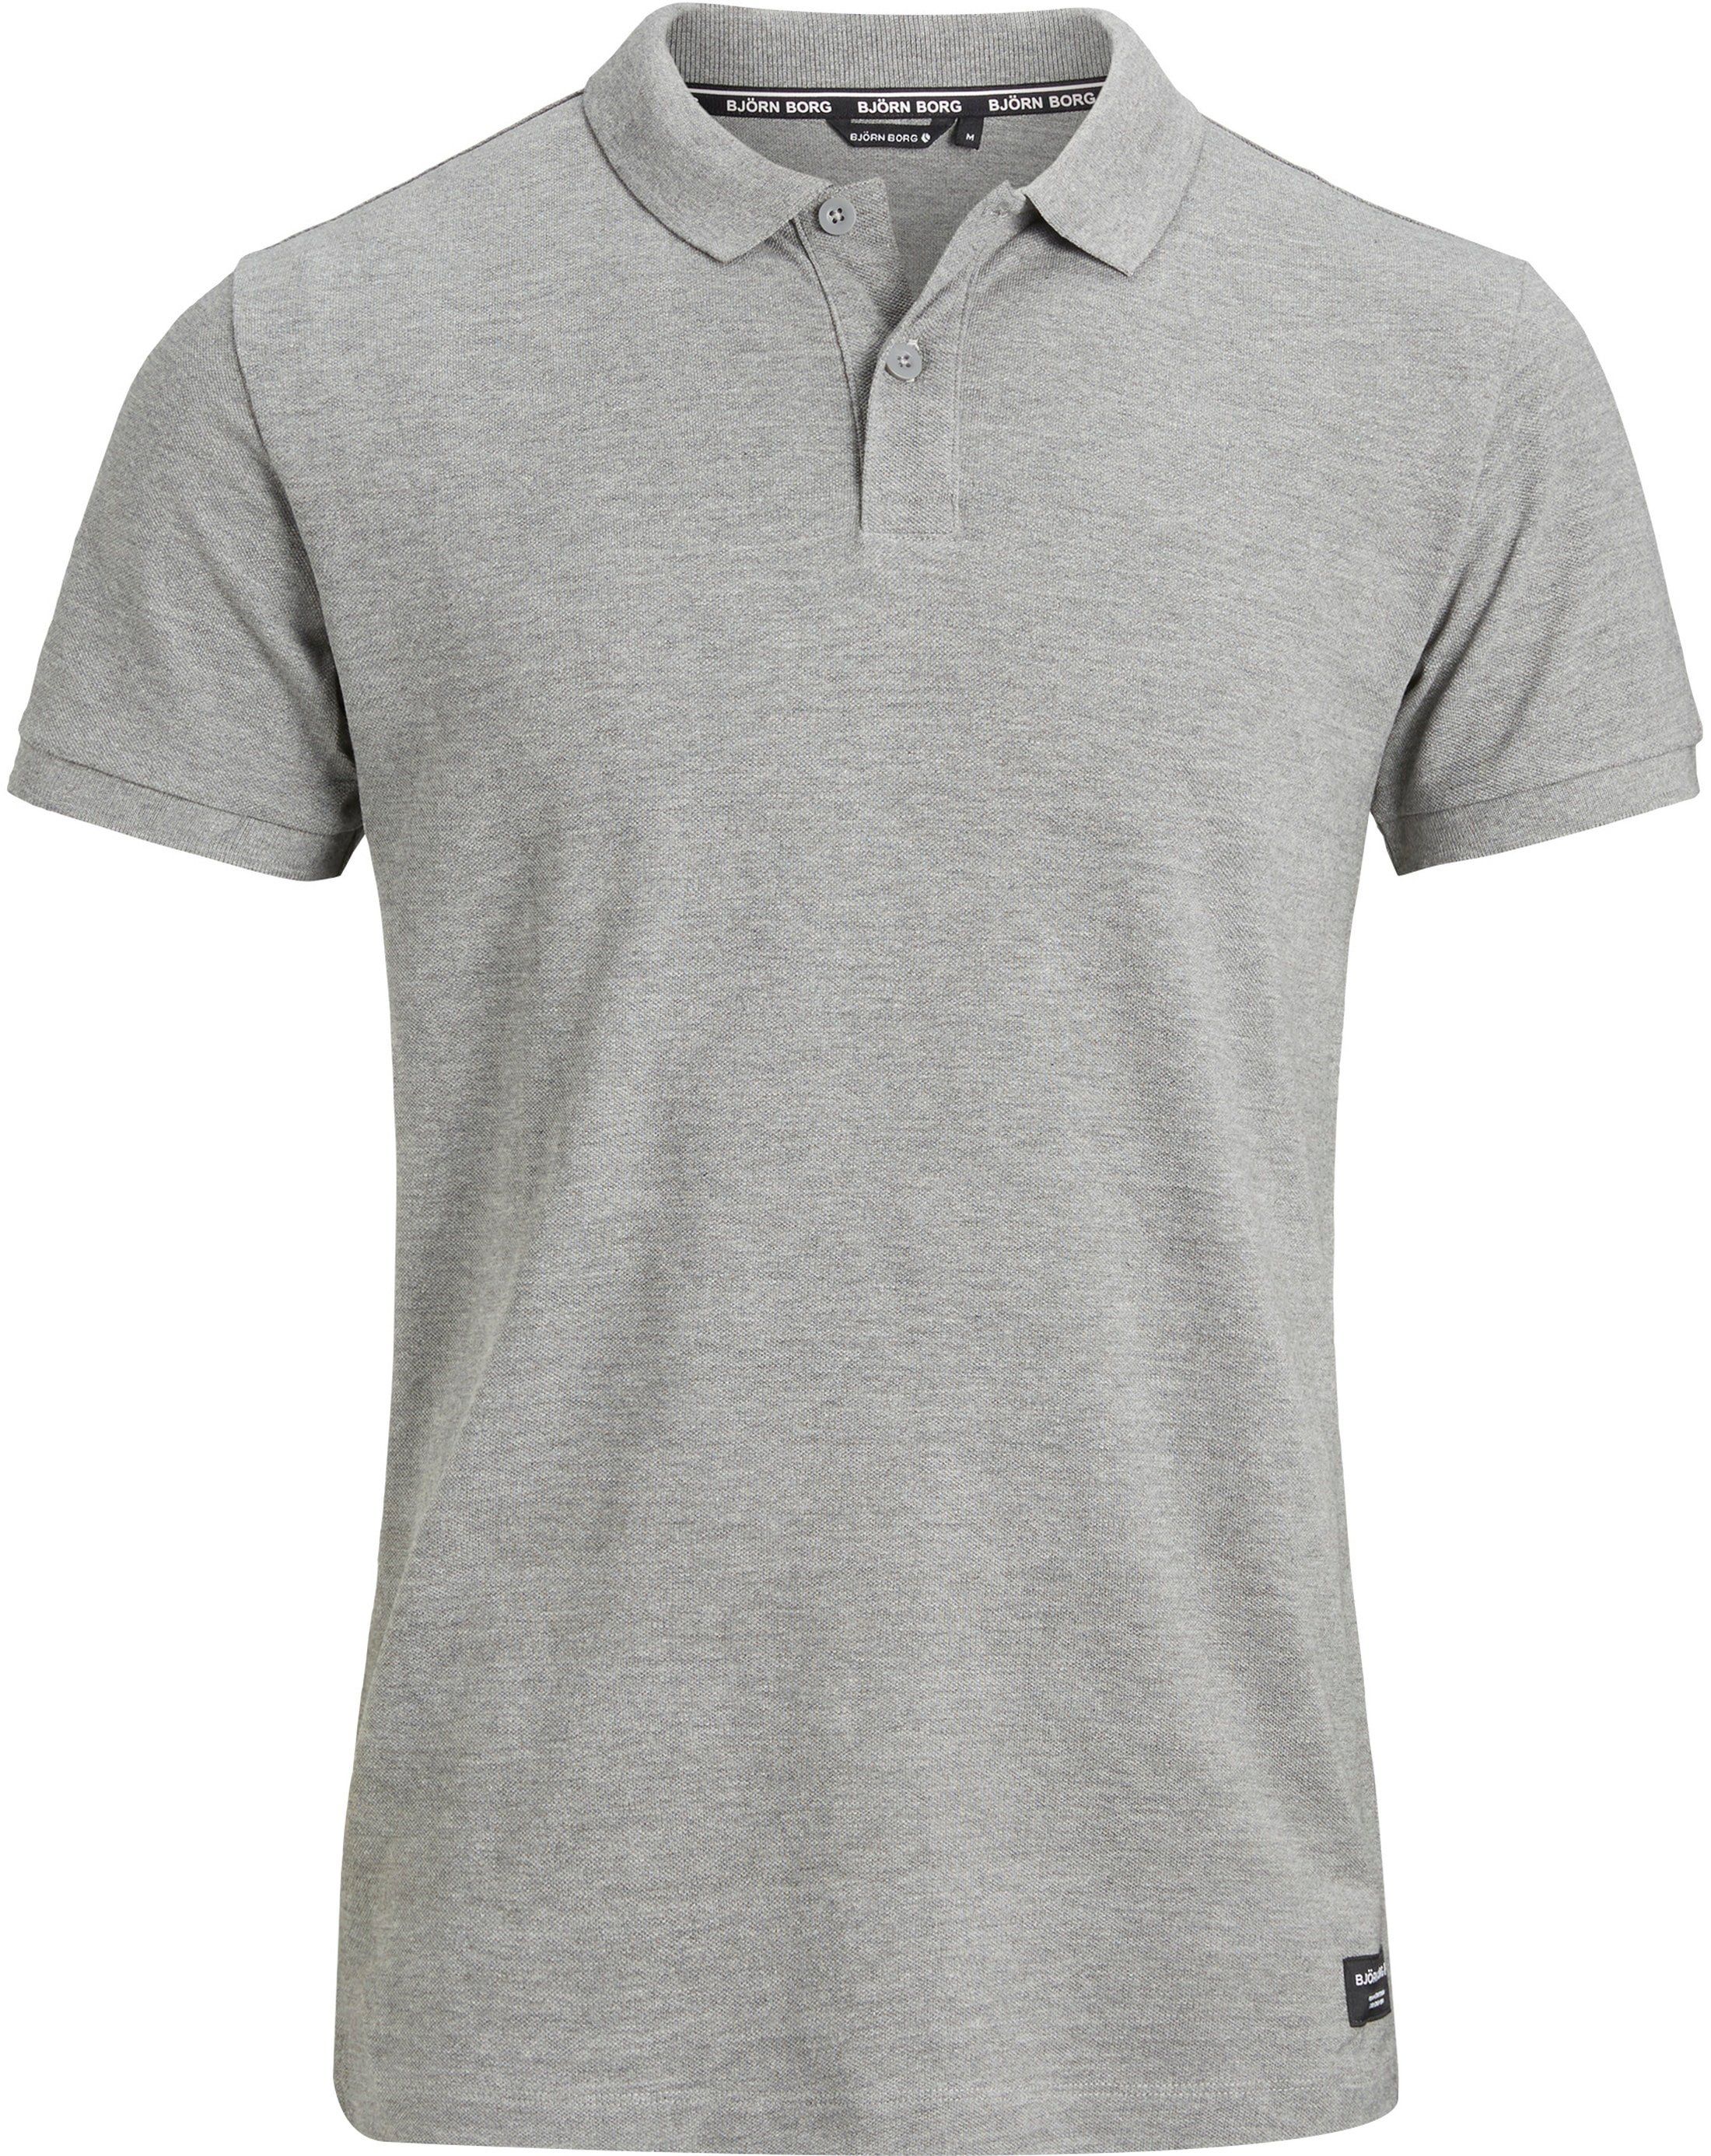 Bjorn Borg Polo Shirt Grey size S